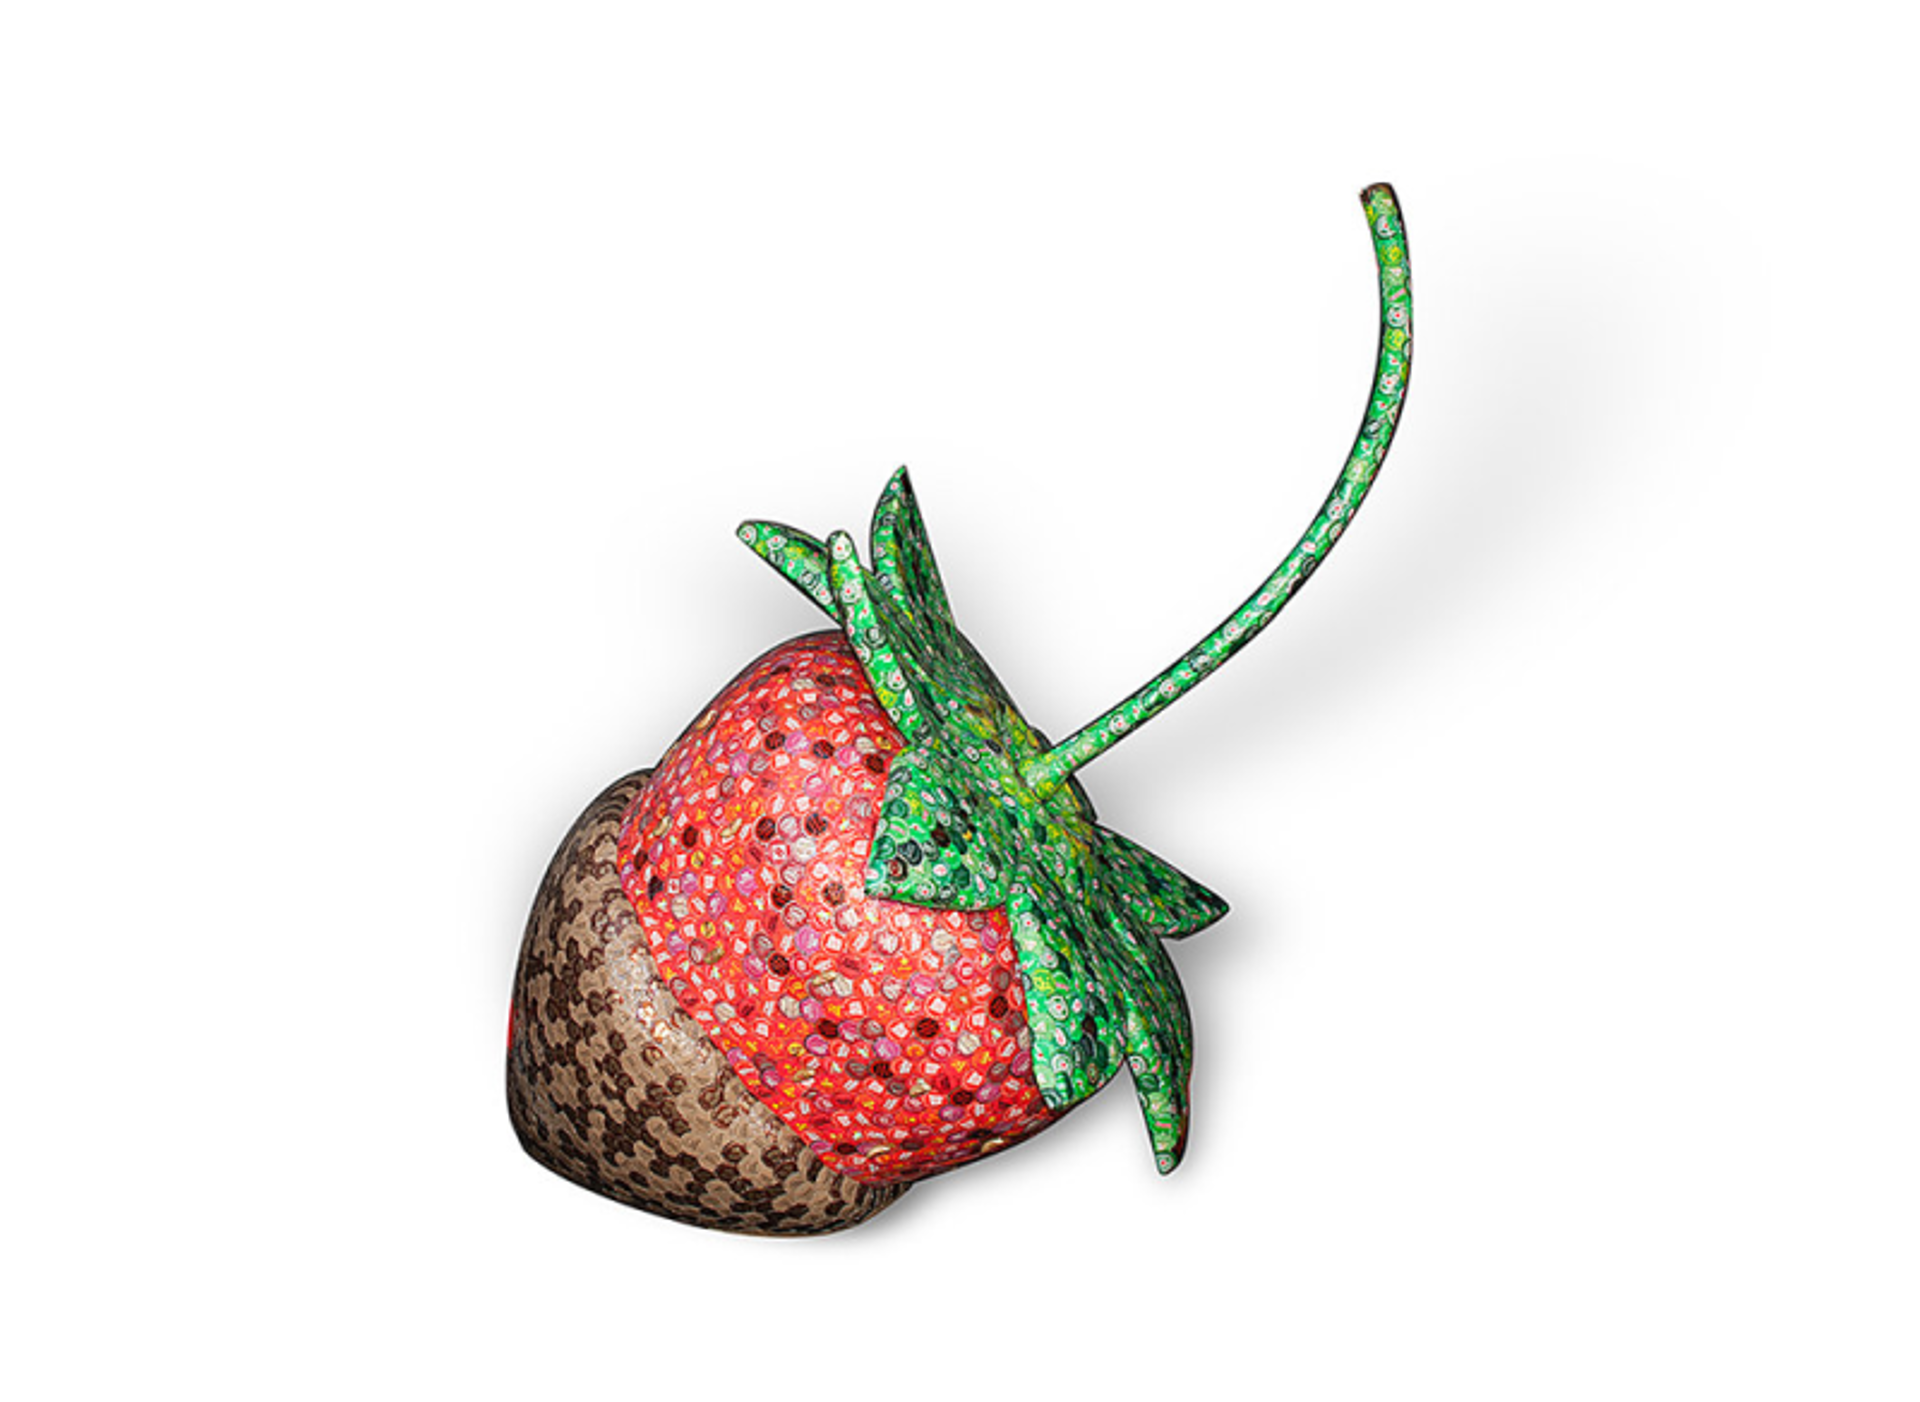 Big Chocolate Covered Strawberry by Dakota Pratt